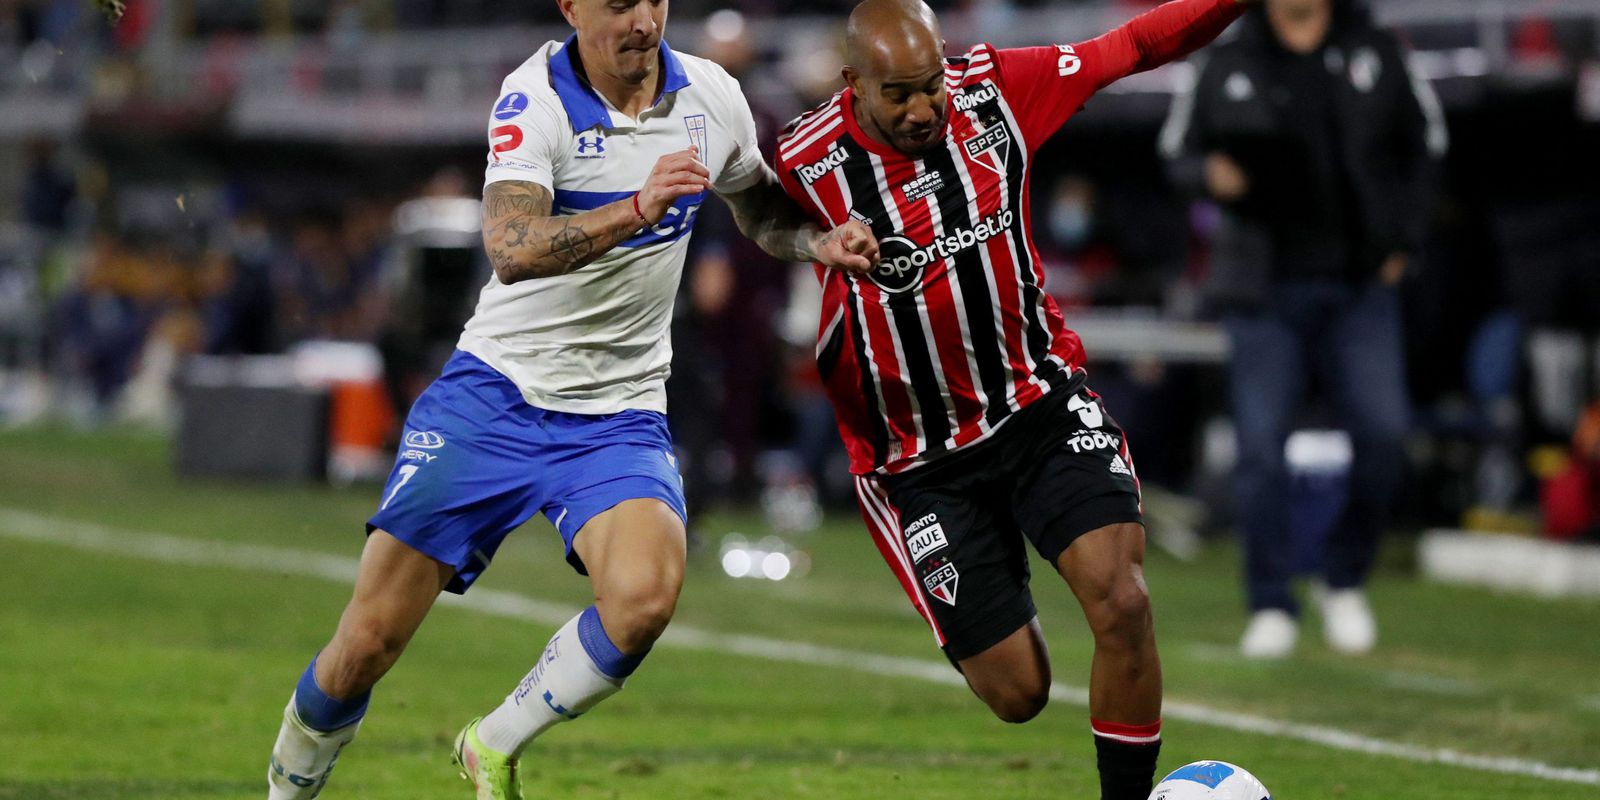 With three players less, São Paulo defeats Universidad Católica